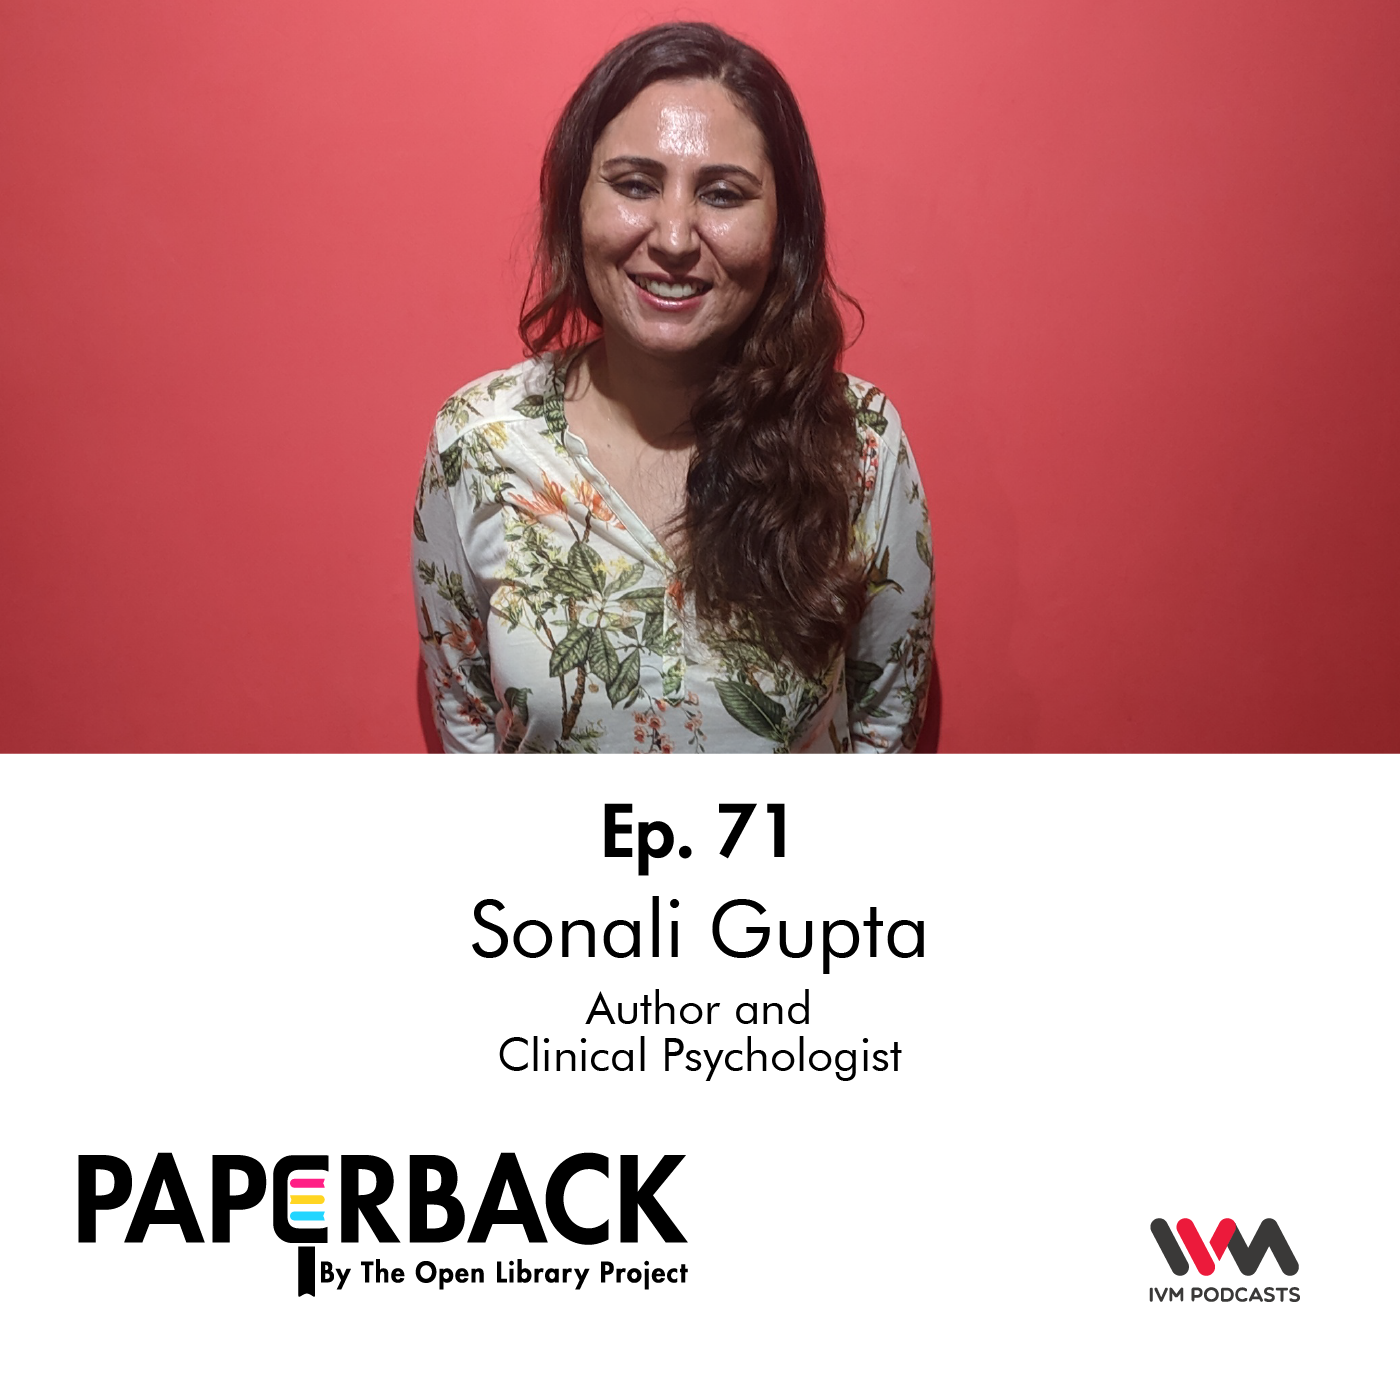 Ep. 71: Sonali Gupta